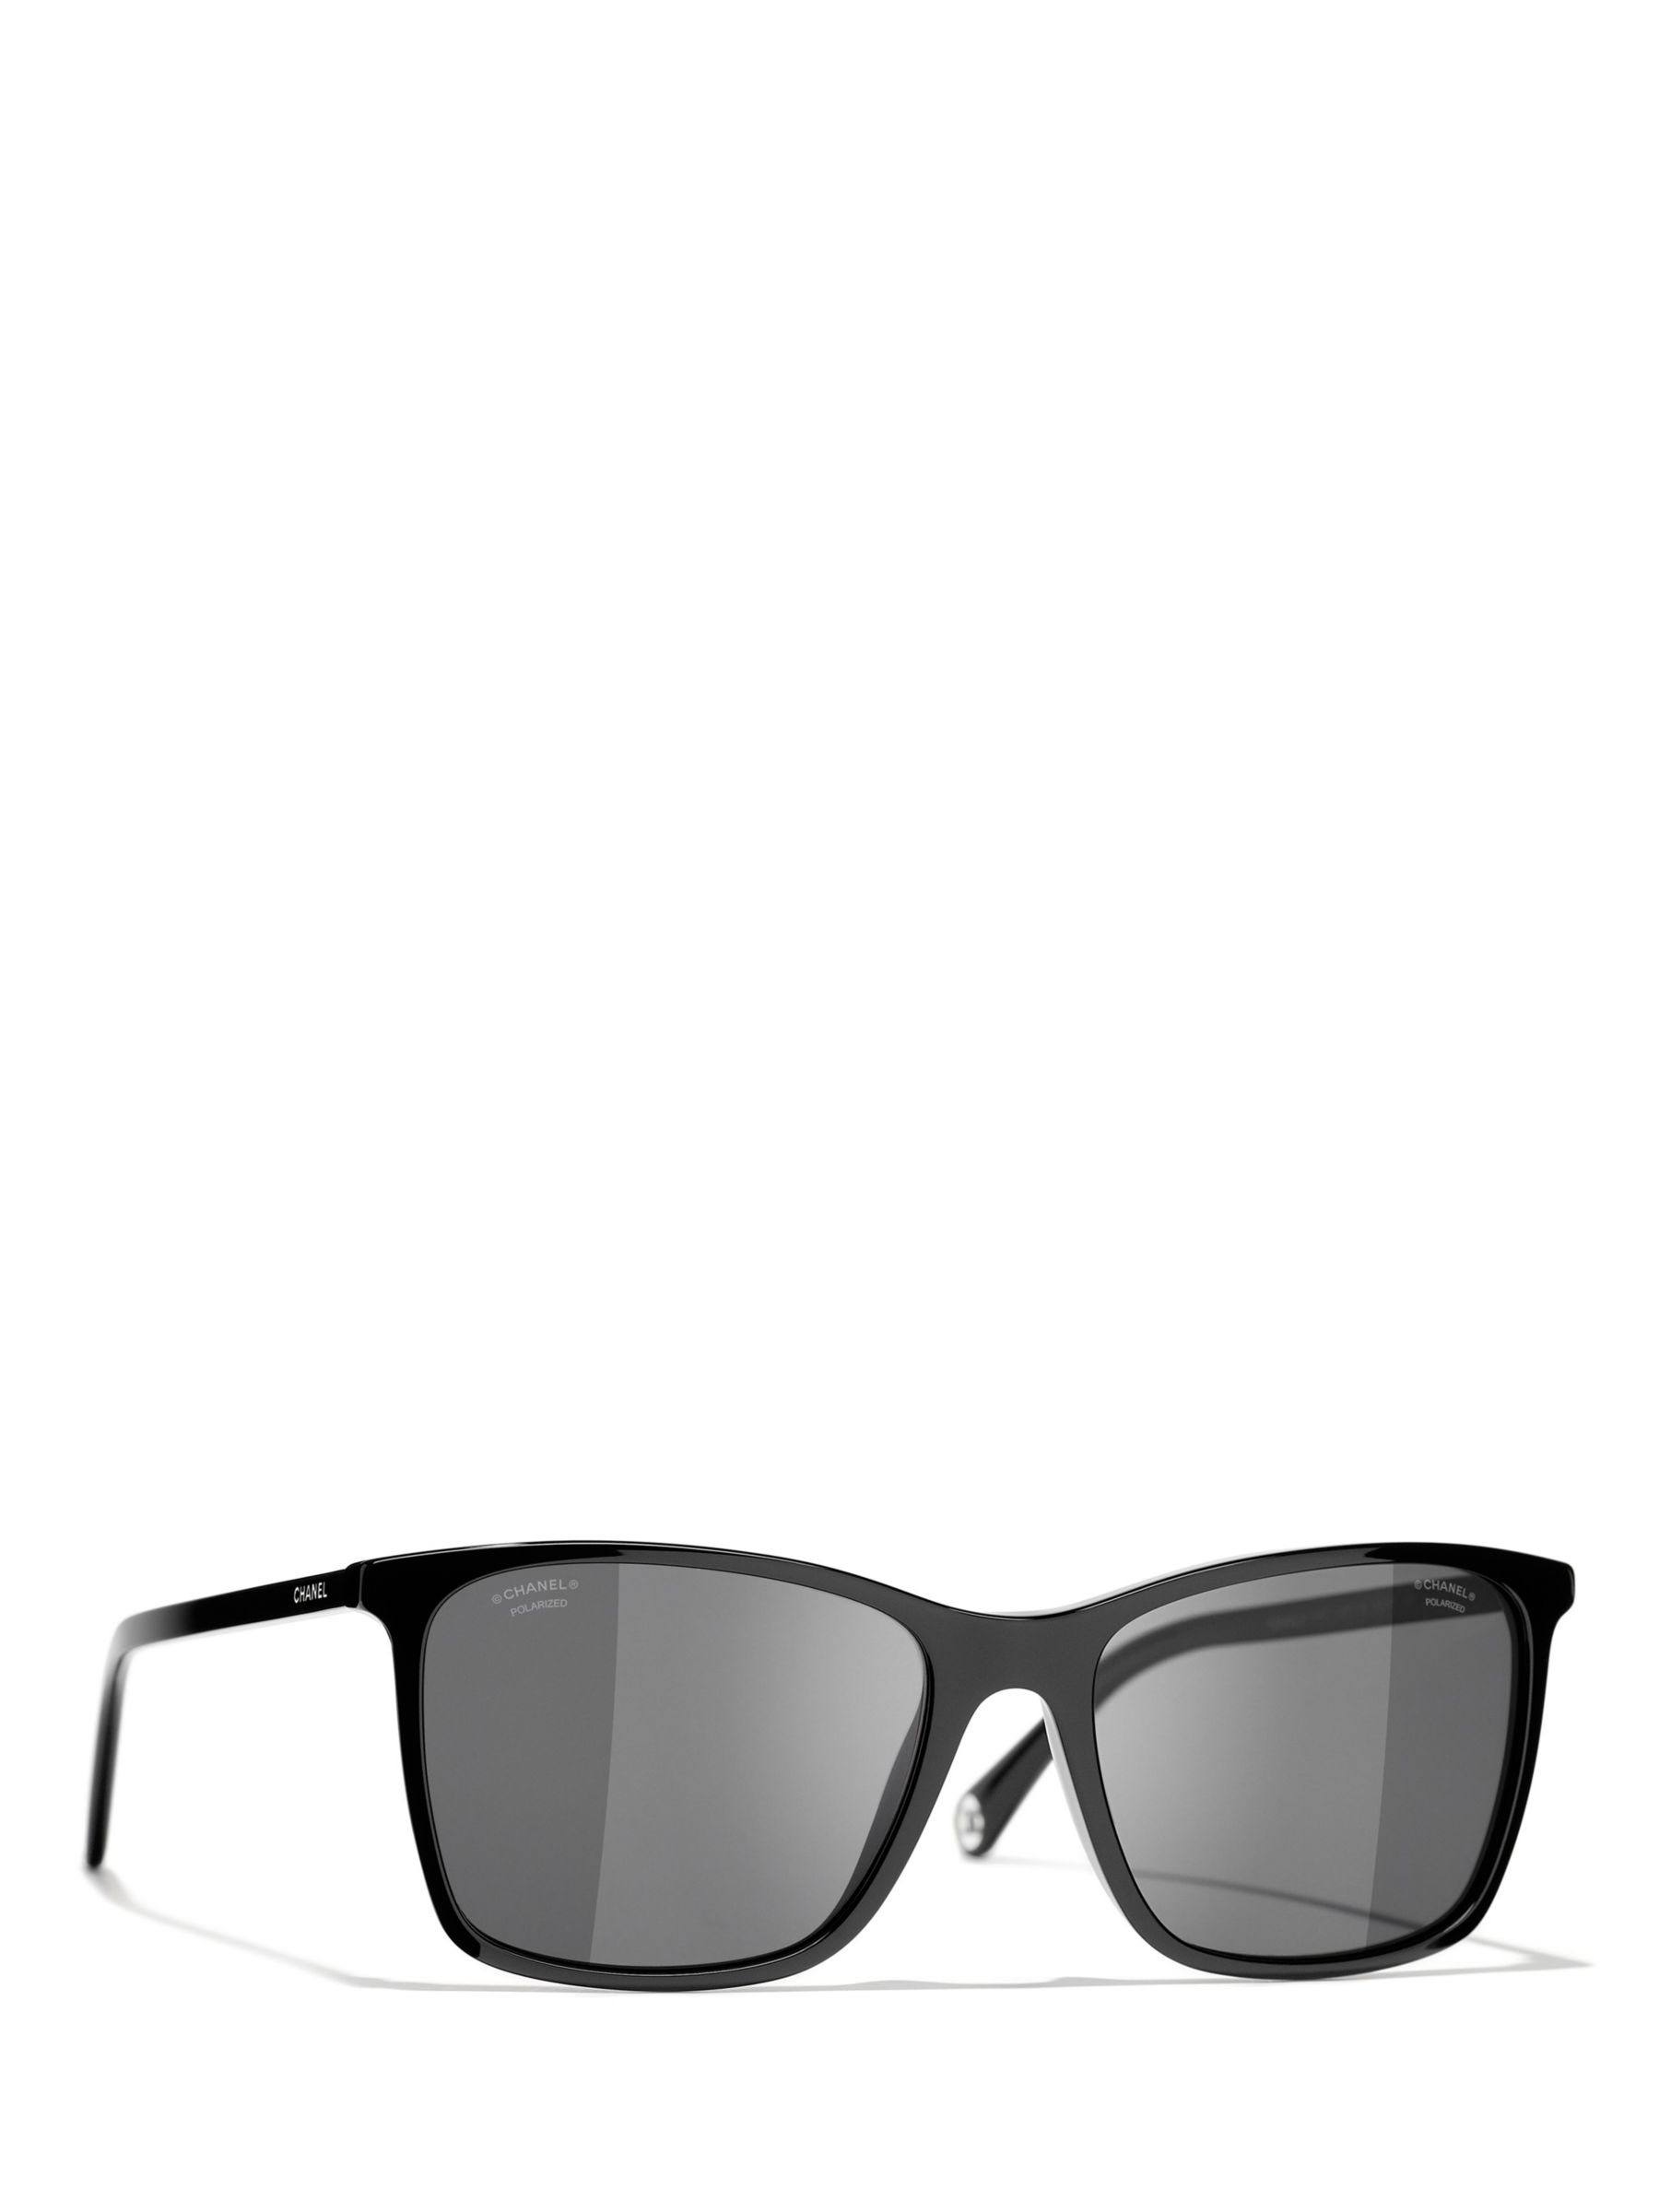 CHANEL Rectangular Sunglasses CH5447 Black/Grey at John Lewis & Partners